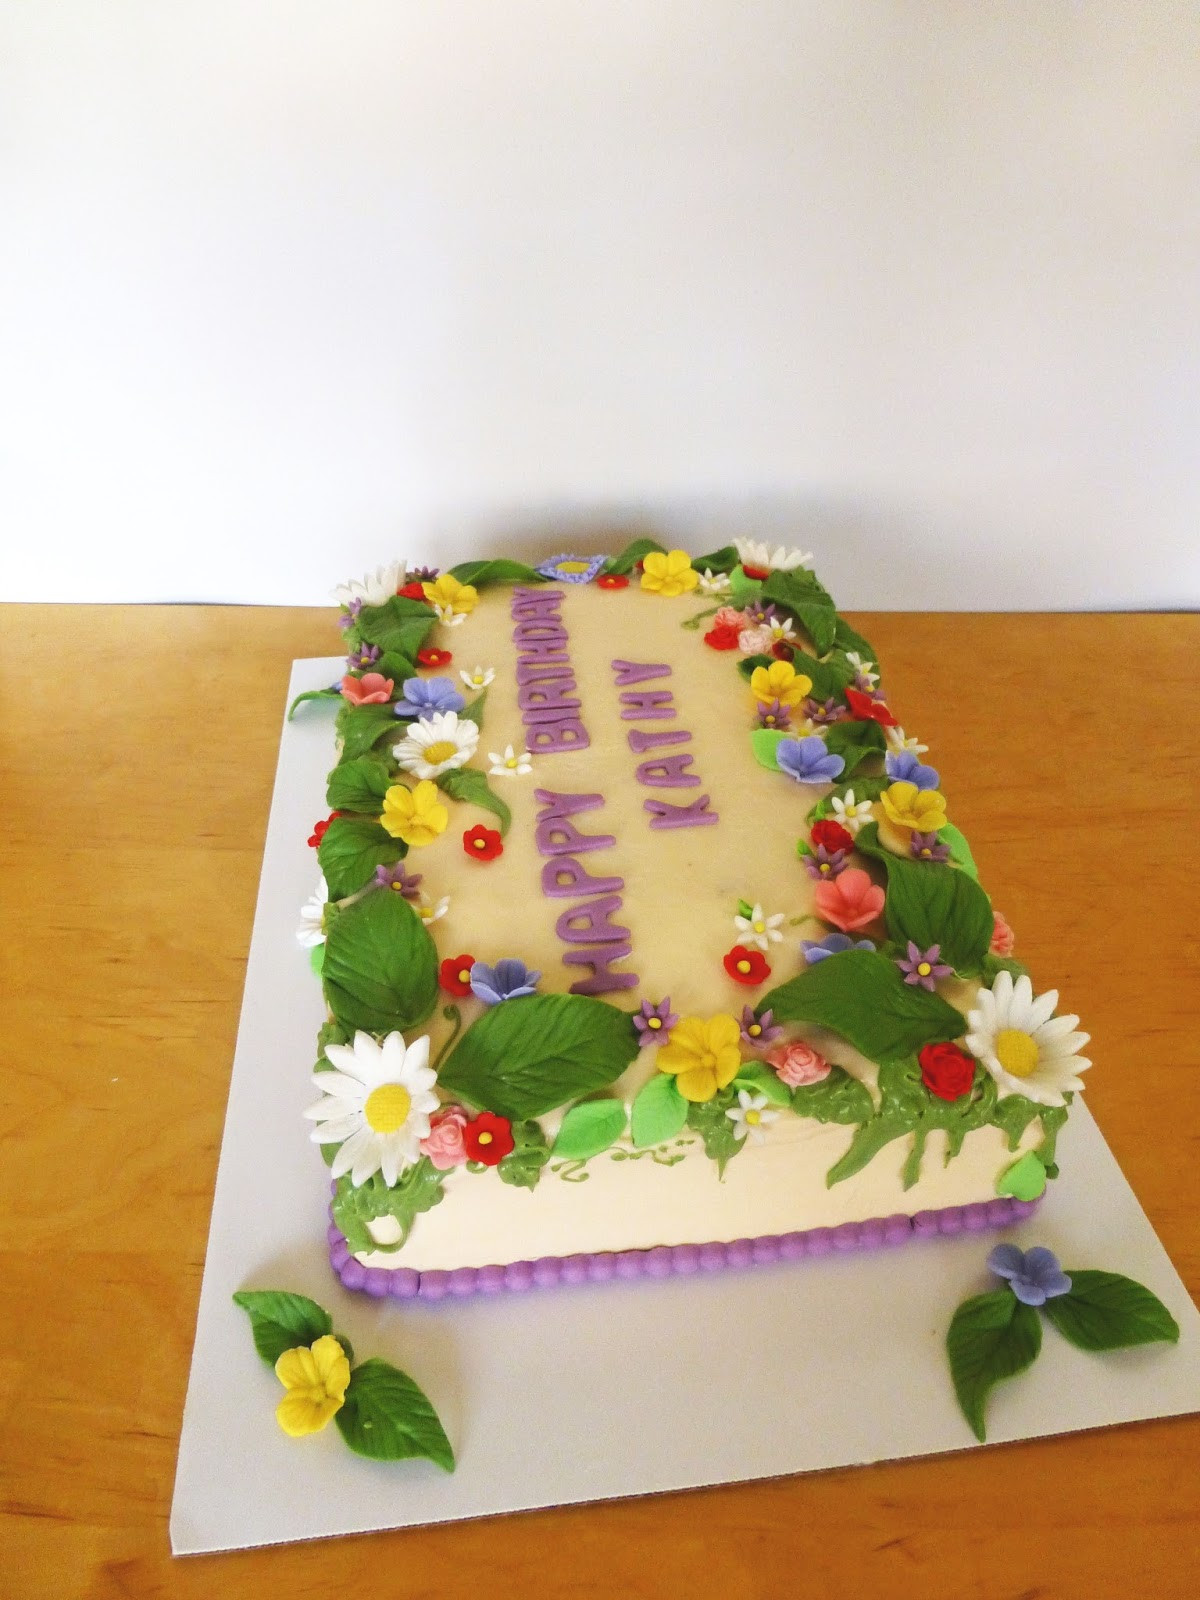 Best ideas about Happy Birthday Kathy Cake
. Save or Pin CakeSophia Kathy s birthday sweet treats Now.